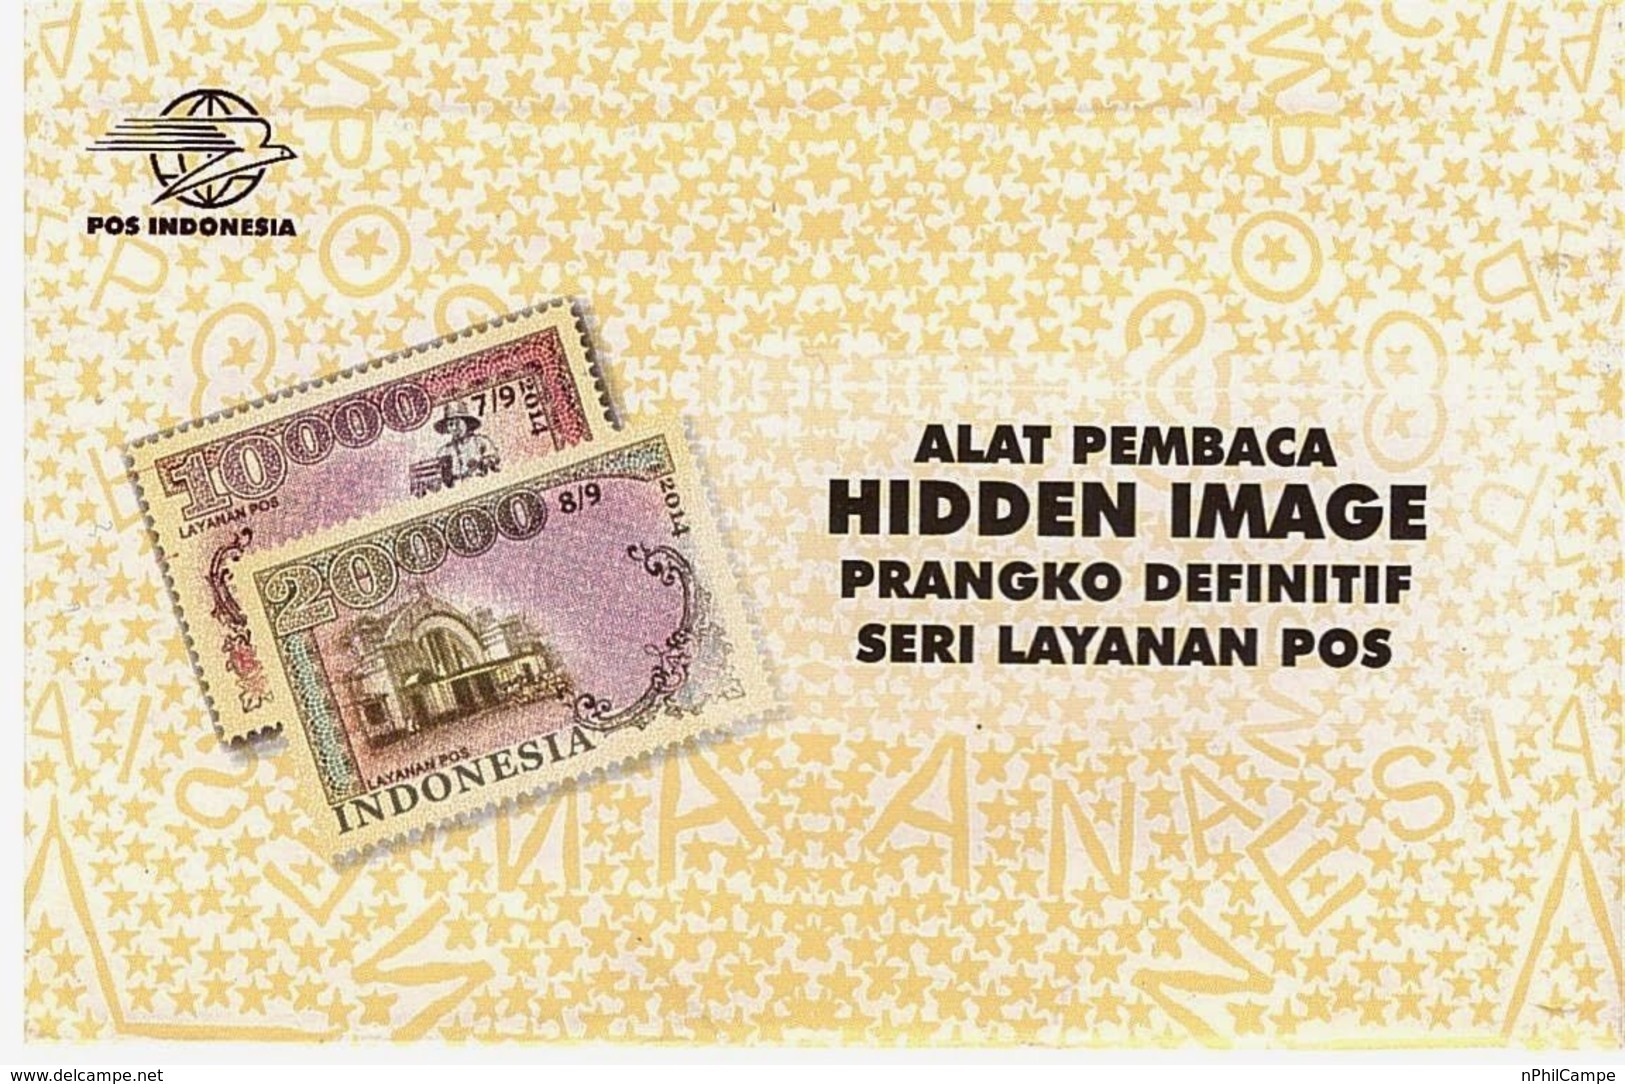 Indonesia Postal Service 2014, "HIDDEN IMAGE" - Indonesien